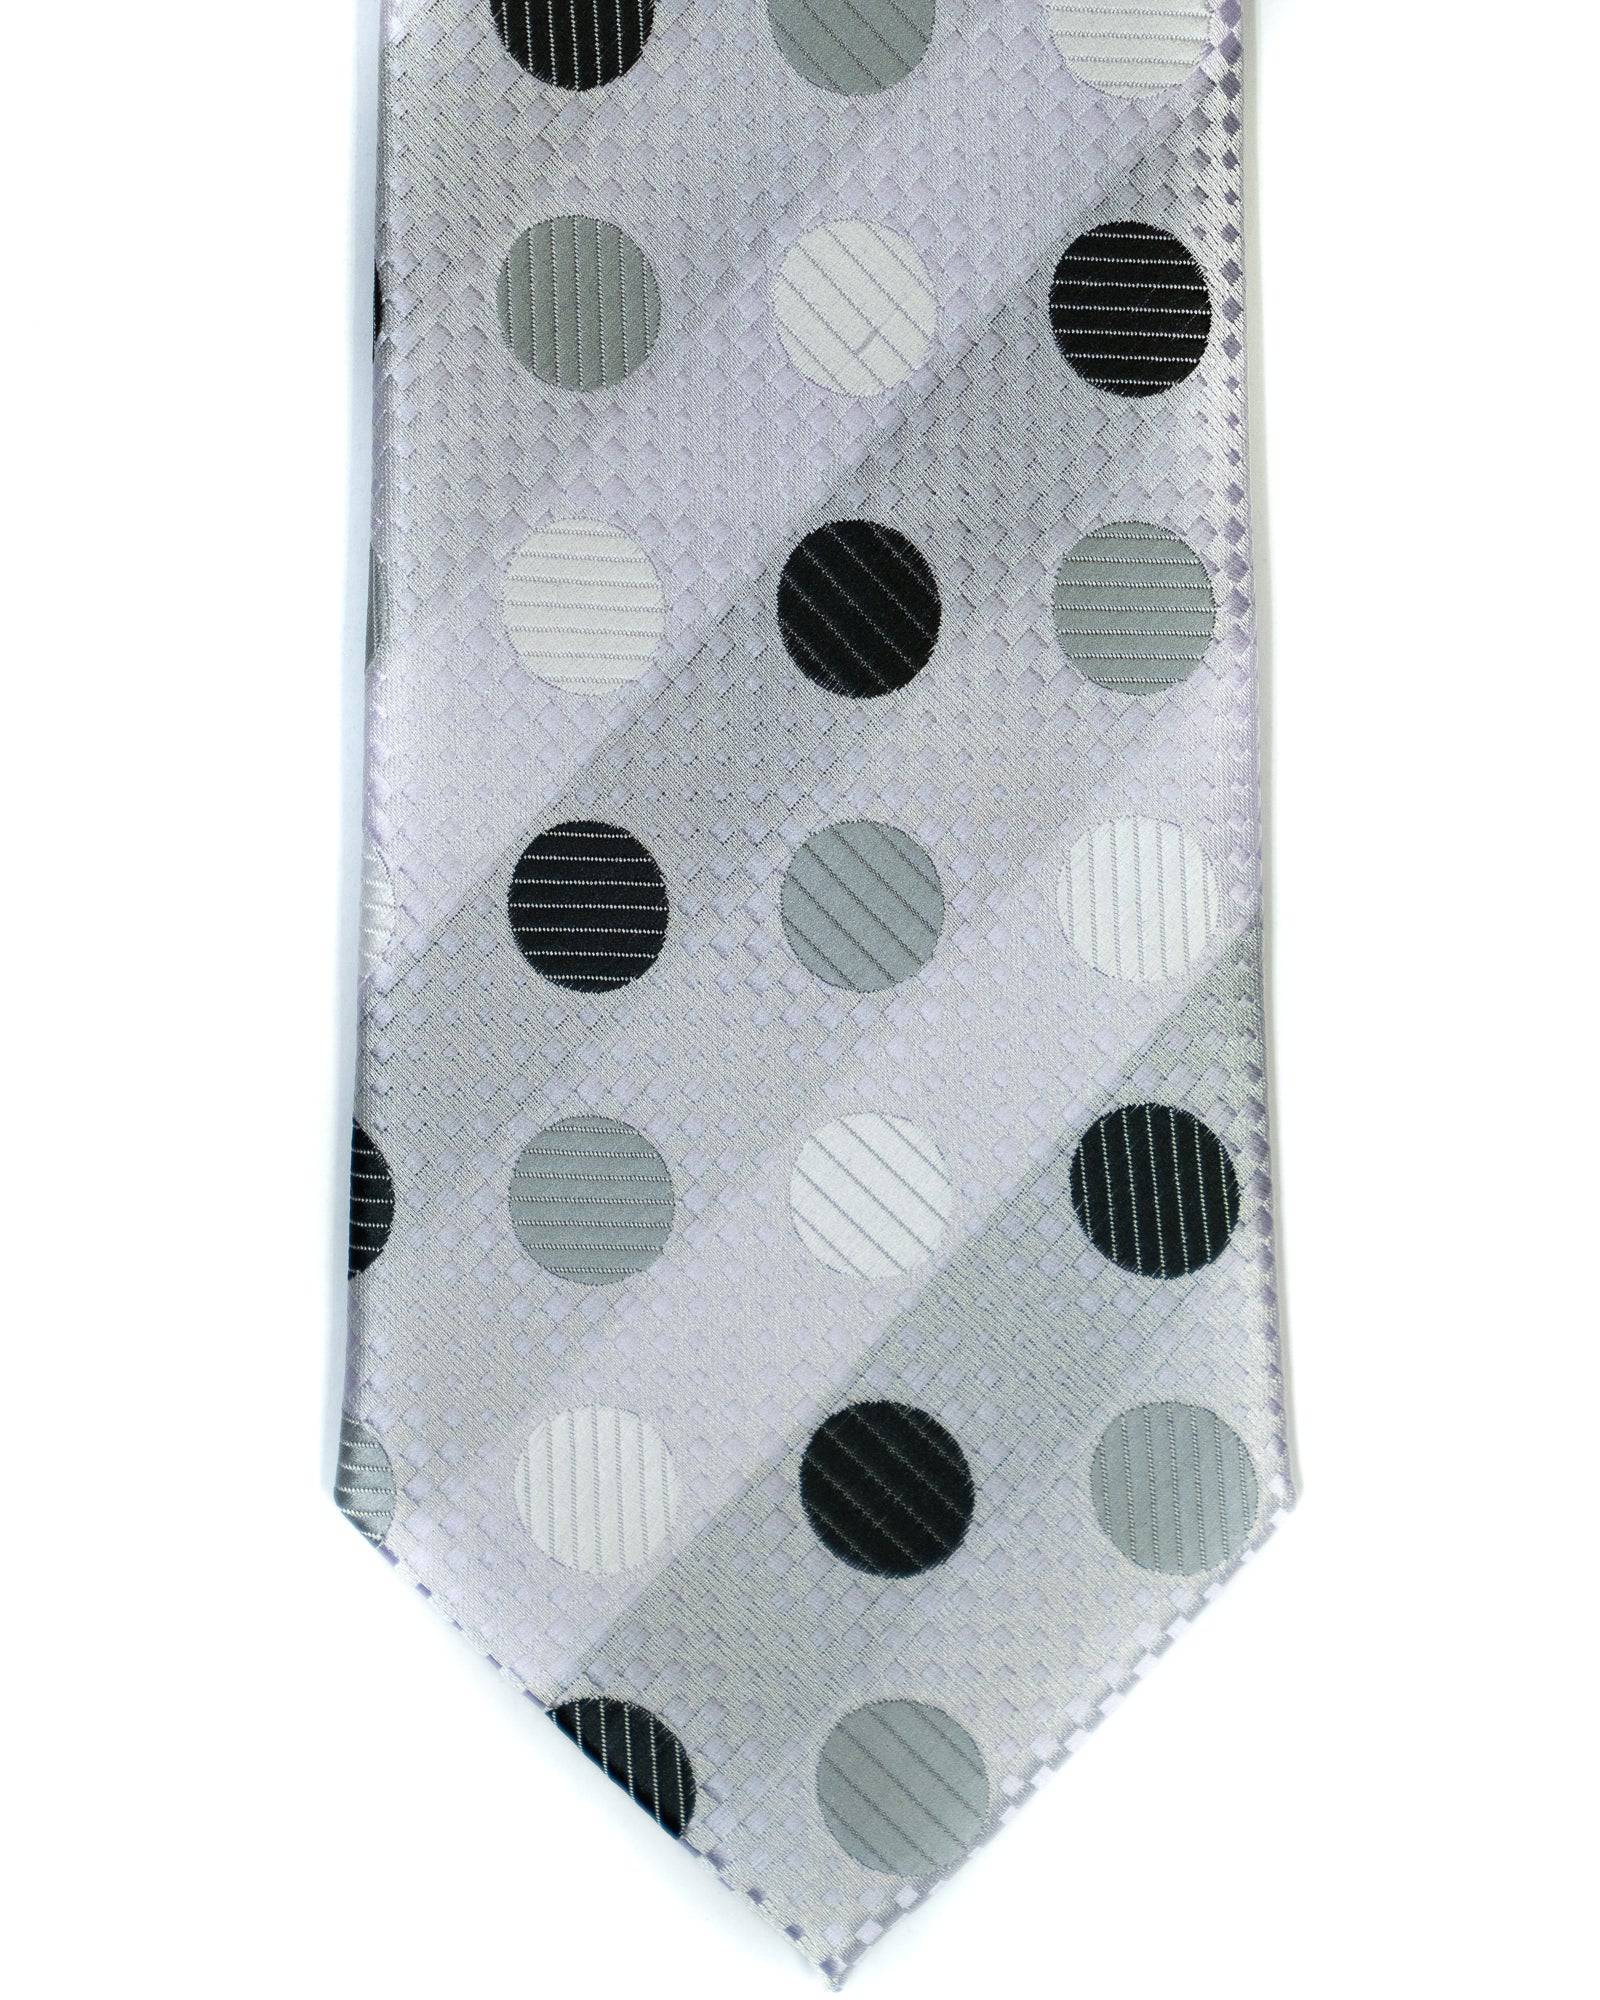 Venturi Uomo Dot Tie in Silver with Black - Rainwater's Men's Clothing and Tuxedo Rental